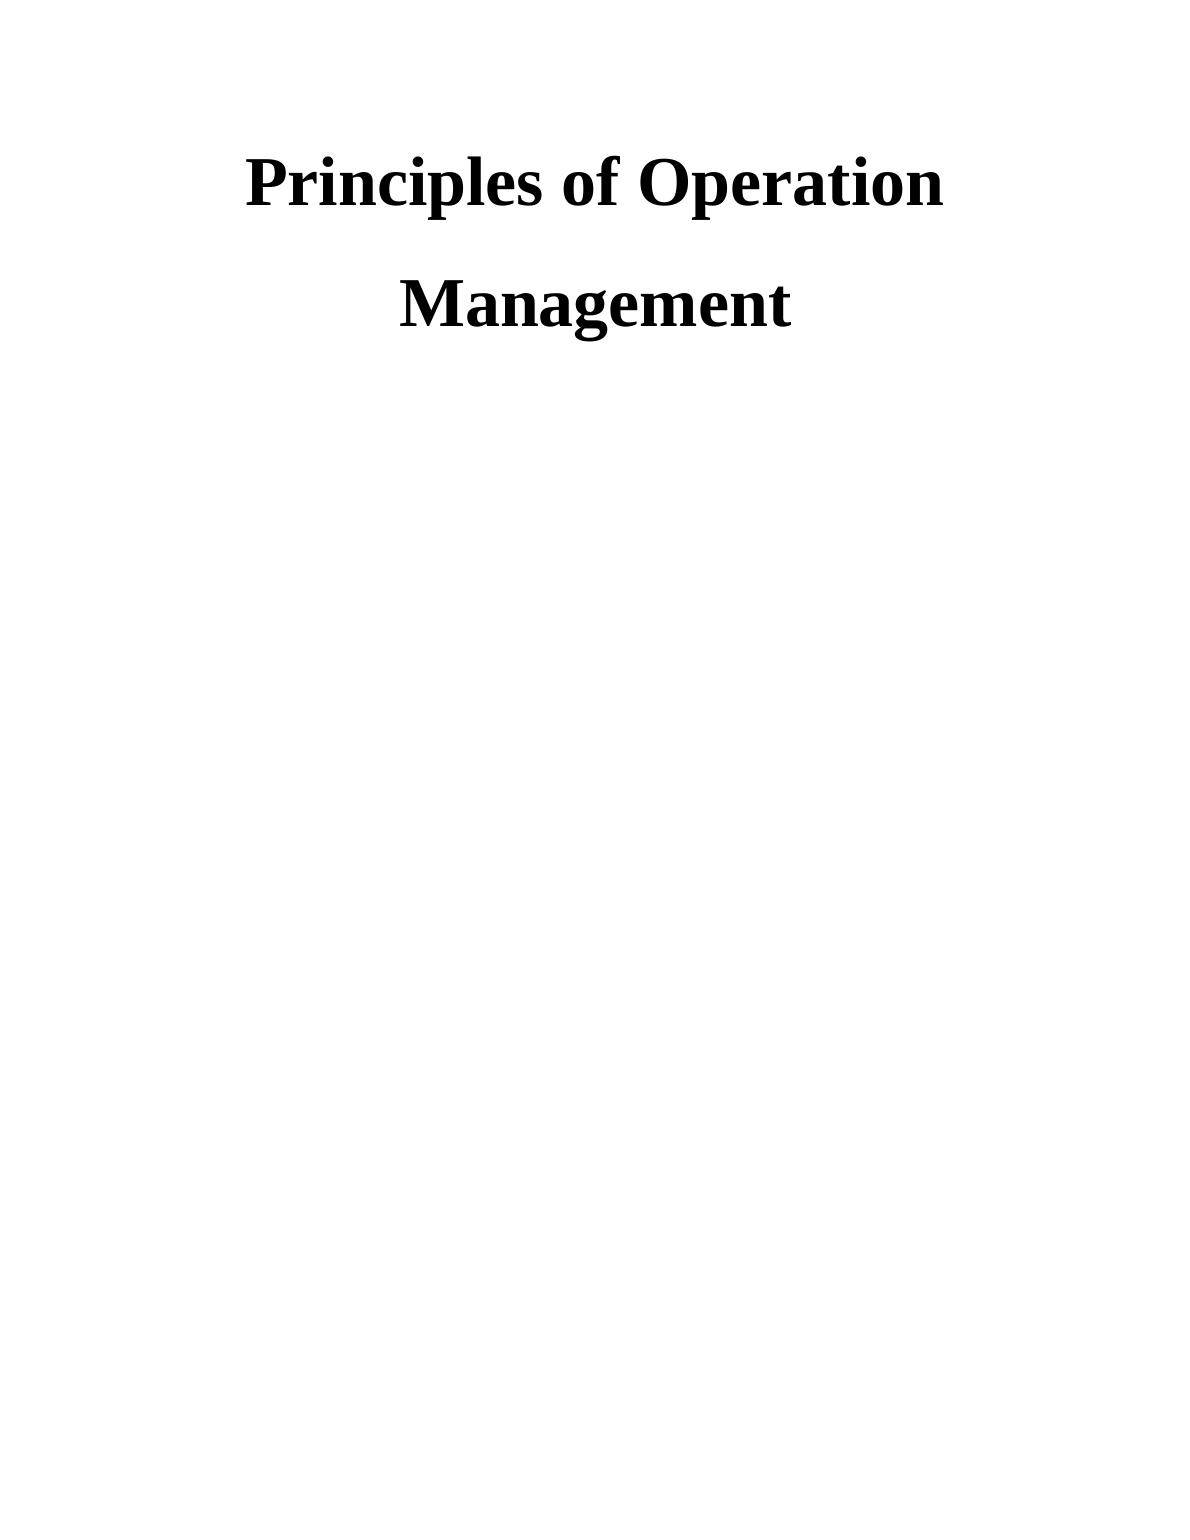 Principles of Operation Management - Pizza Hut_1